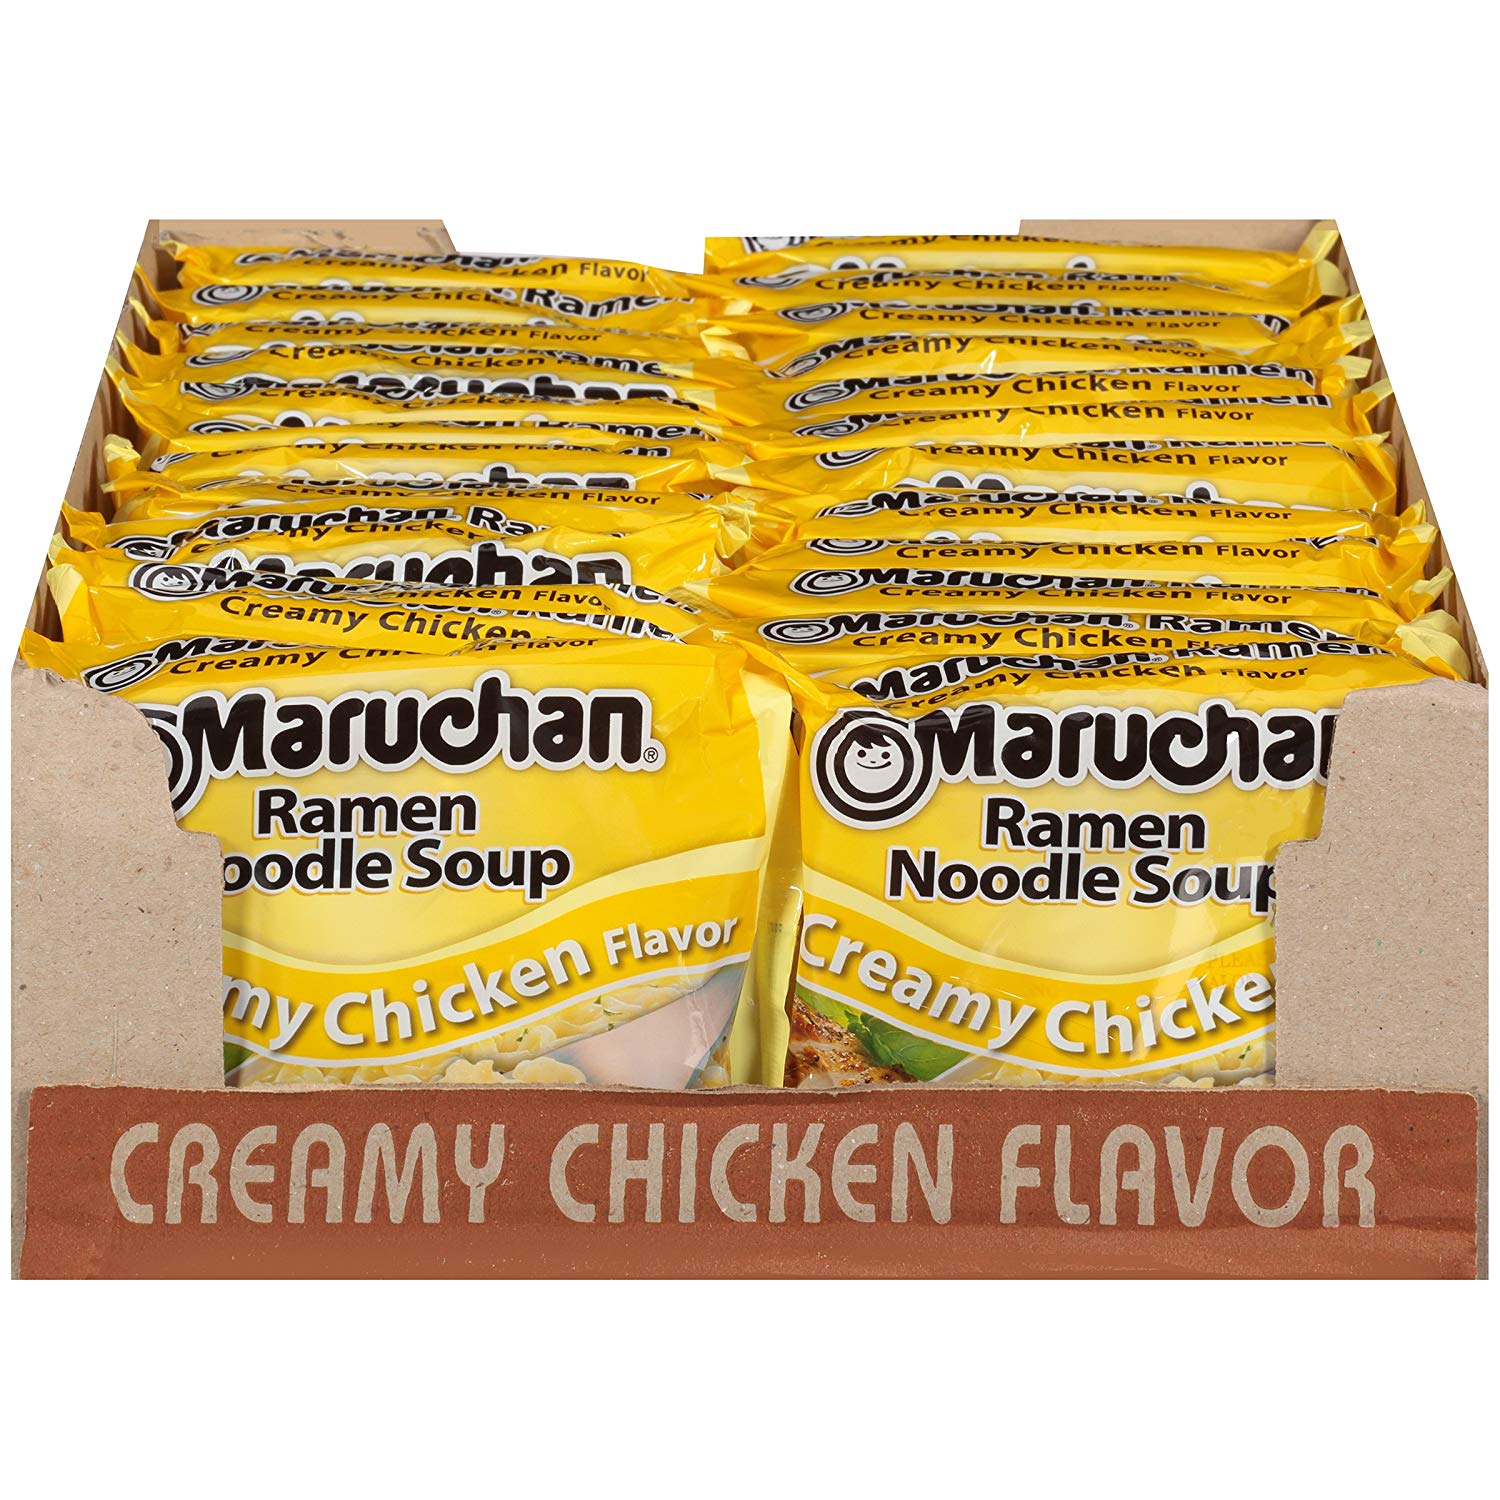 Maruchan Ramen (Pork, Cream Chicken, or Soy Sauce Flavor), 3.0 Oz, 24 Count...